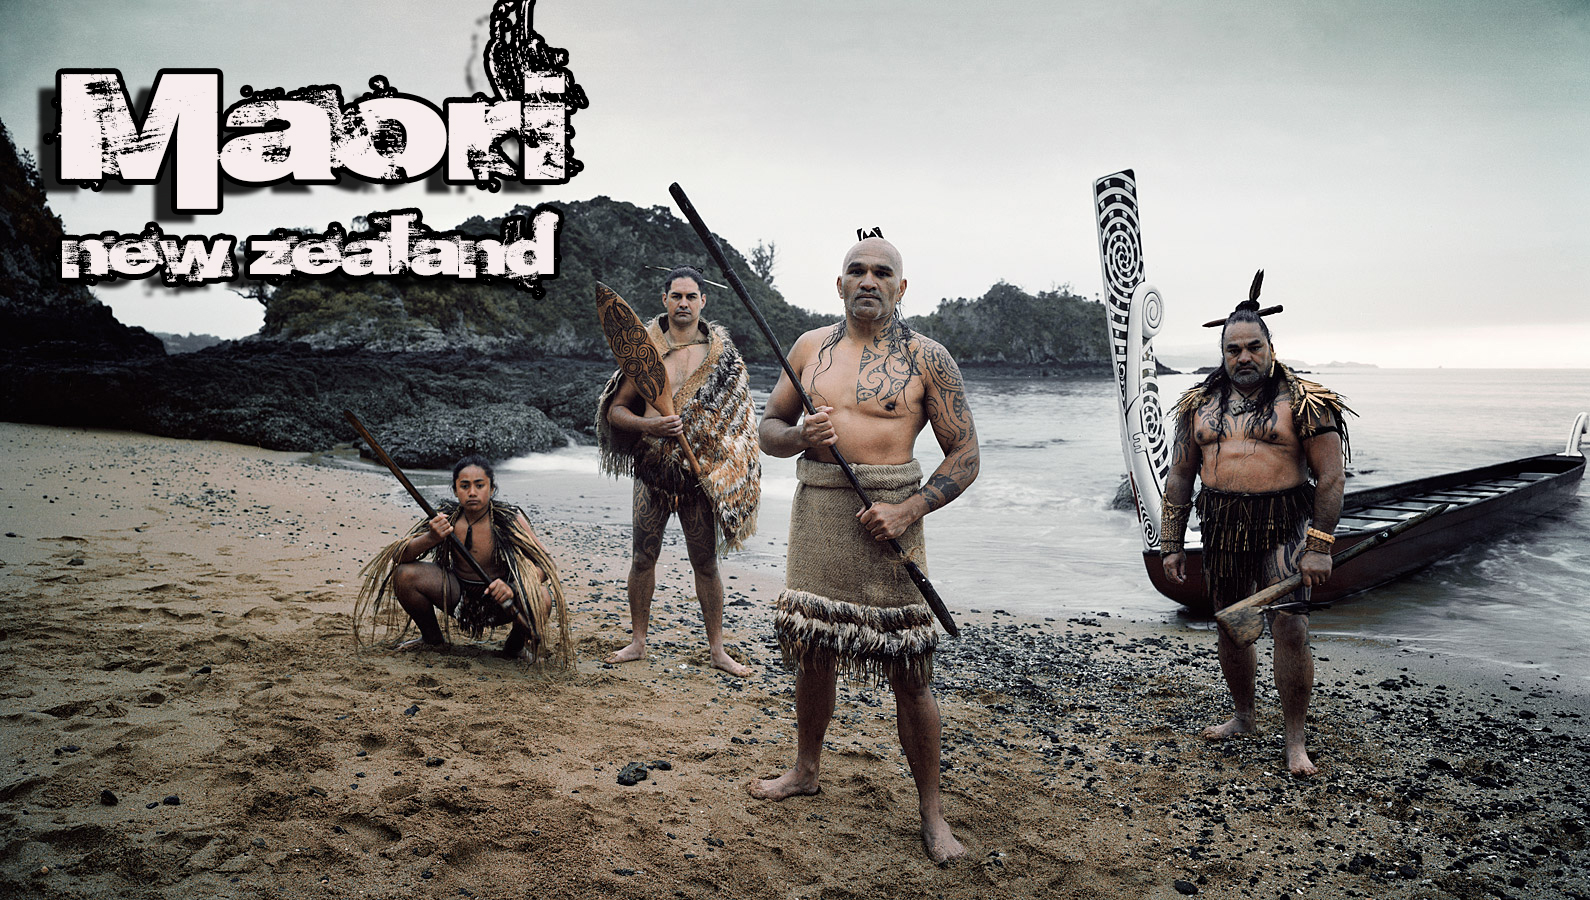 lifestyle of maori